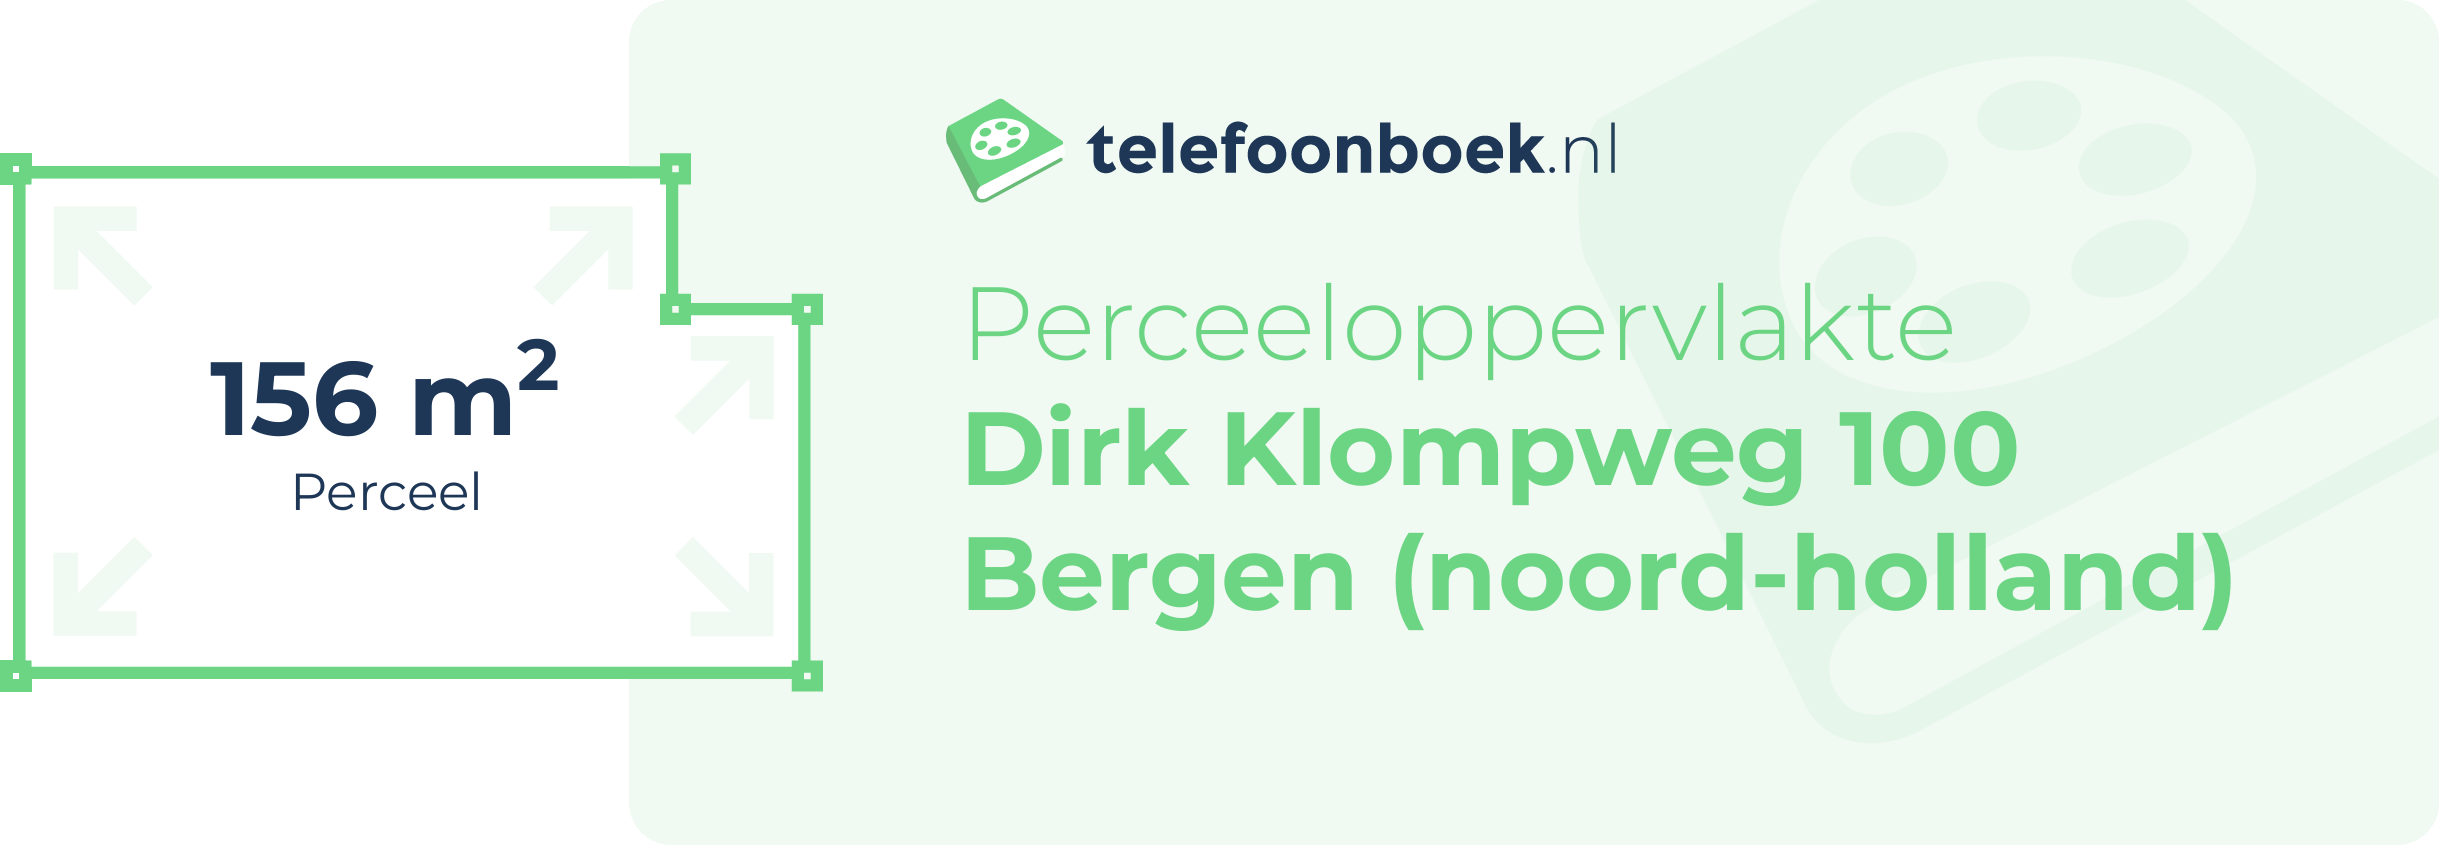 Perceeloppervlakte Dirk Klompweg 100 Bergen (Noord-Holland)